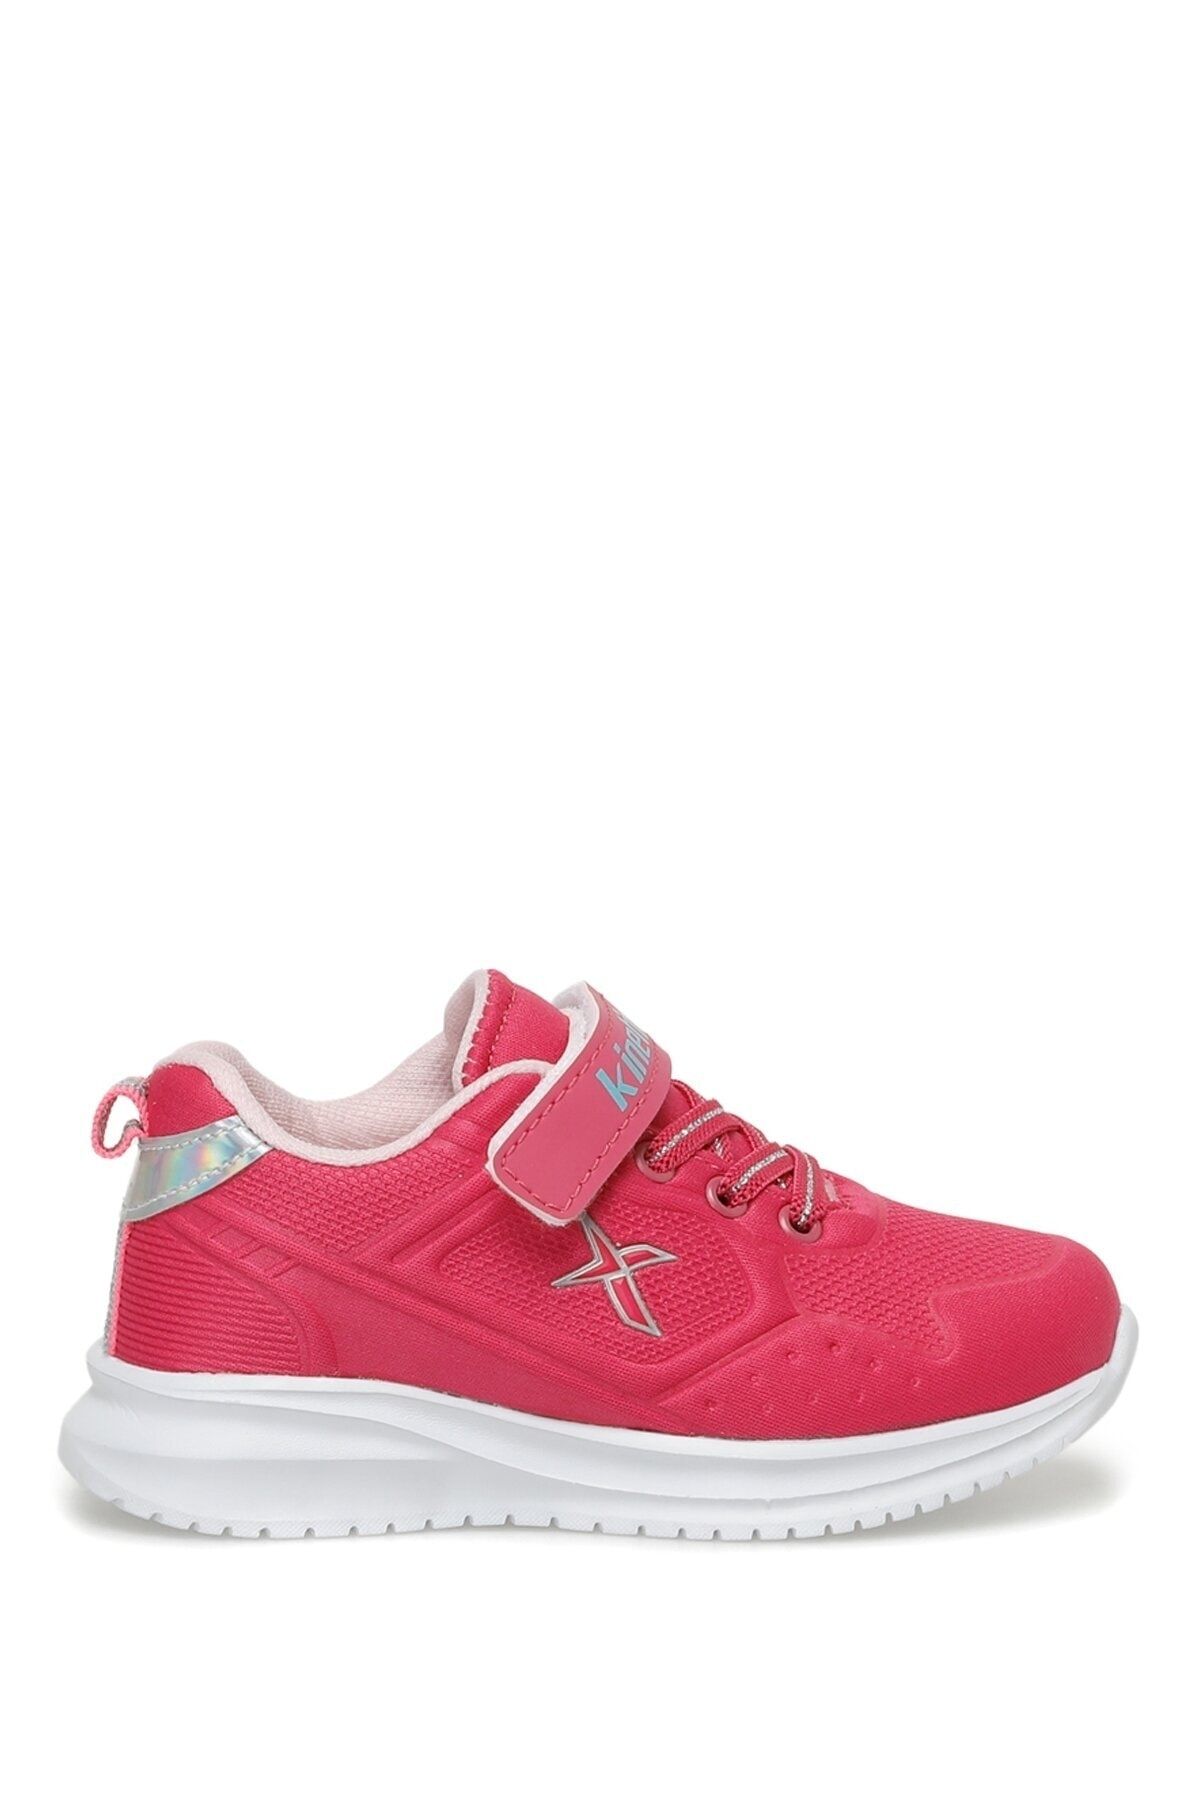 Kinetix Frozey J 3fx Fuchsia Girls' Sports Shoes - Trendyol